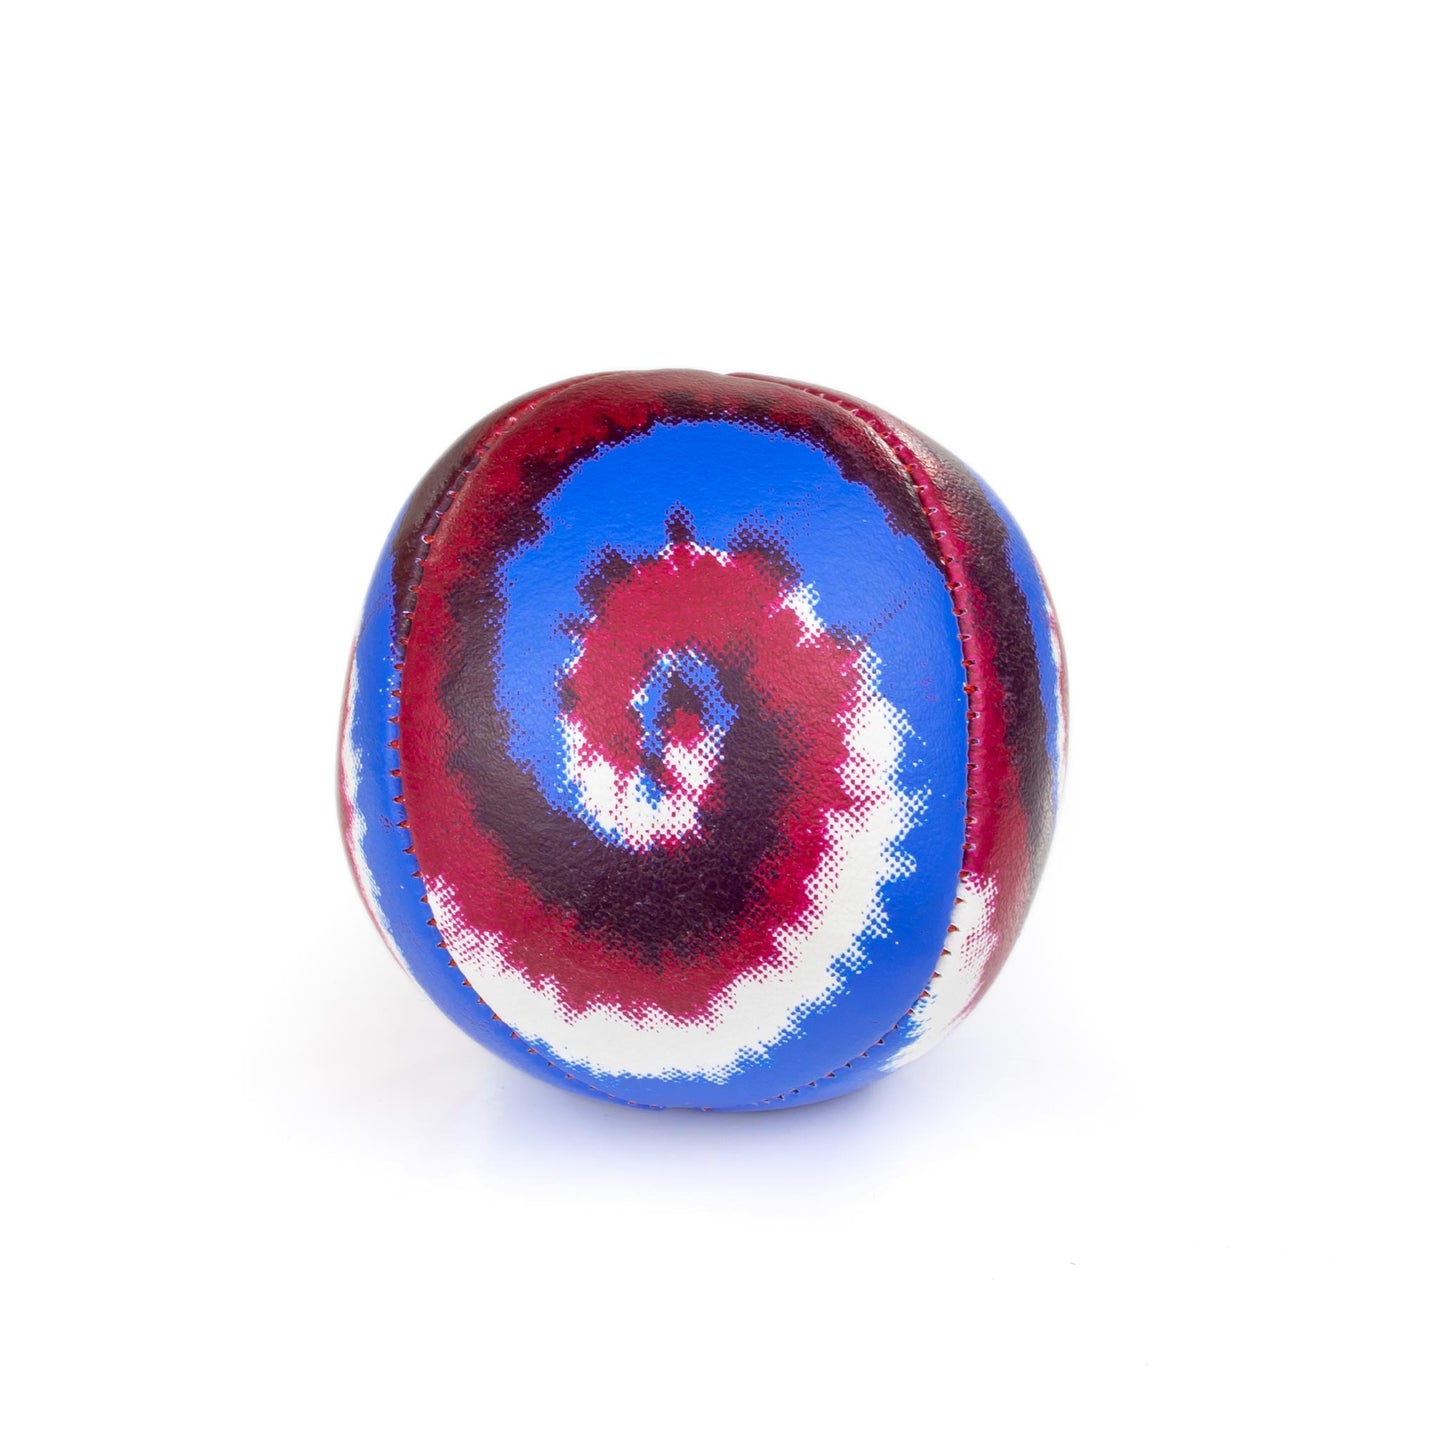 Blue / White / Red Swirl tye dye juggling ball